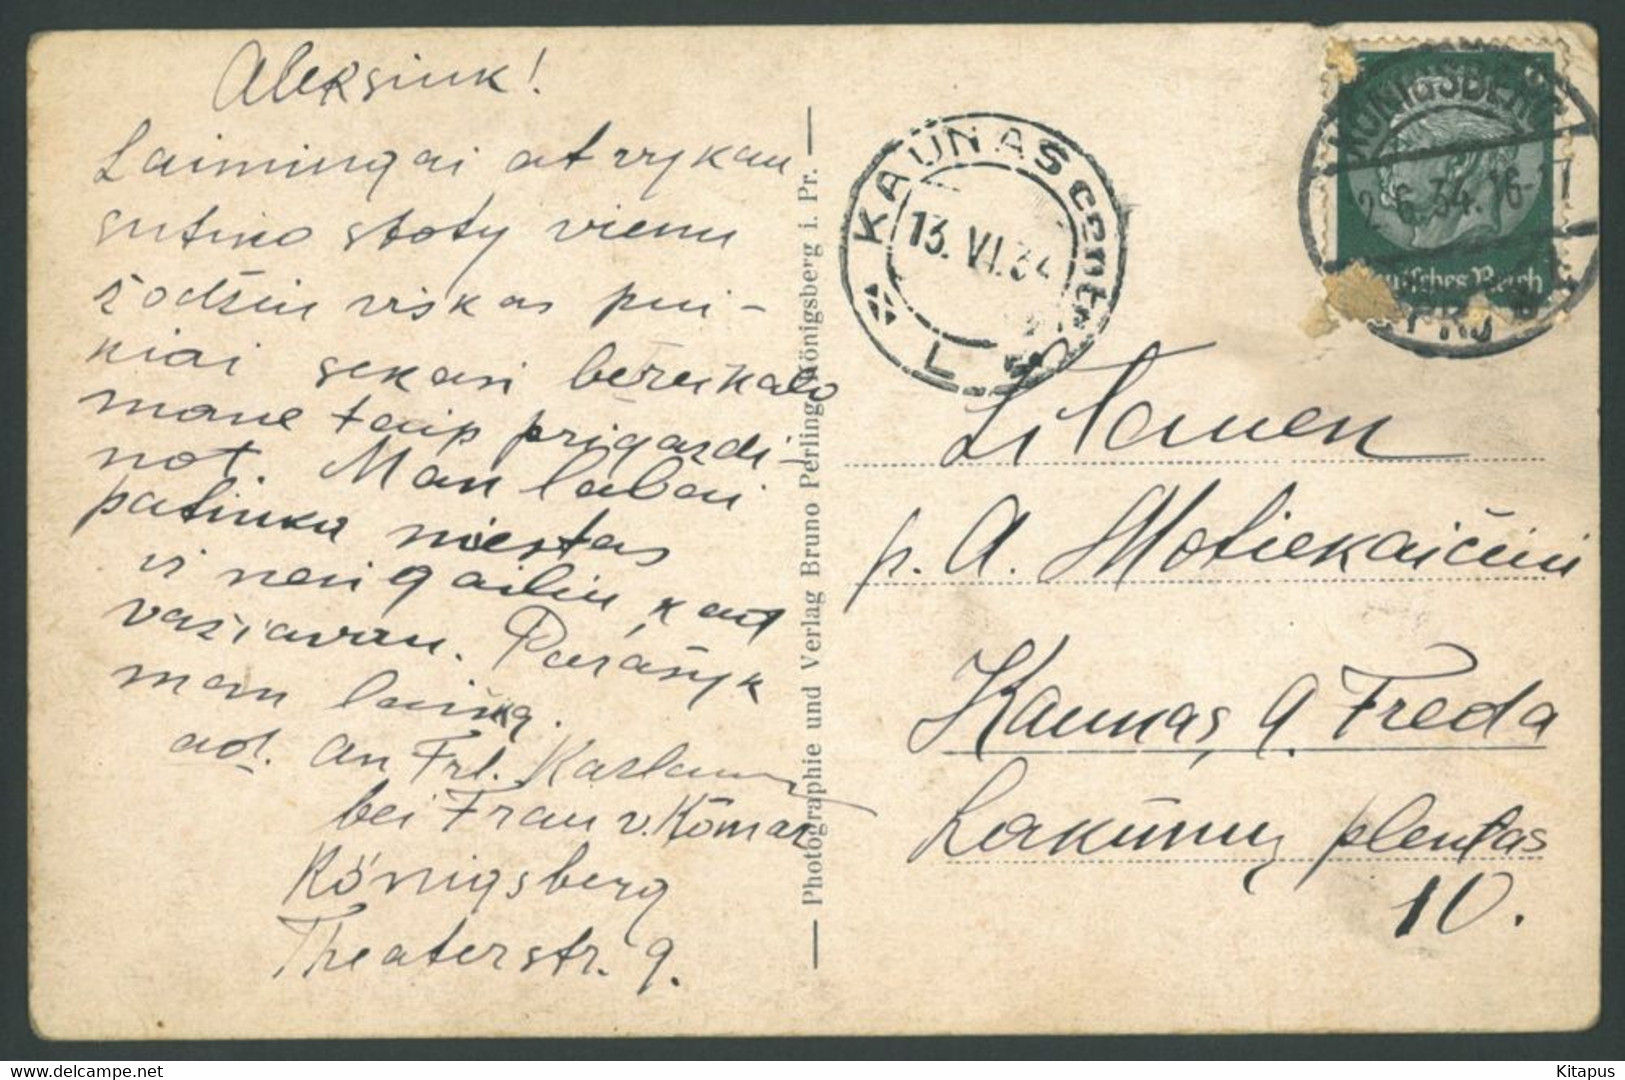 KONIGSBERG Vintage Postcard Germany Kaliningrad Russia - Ostpreussen